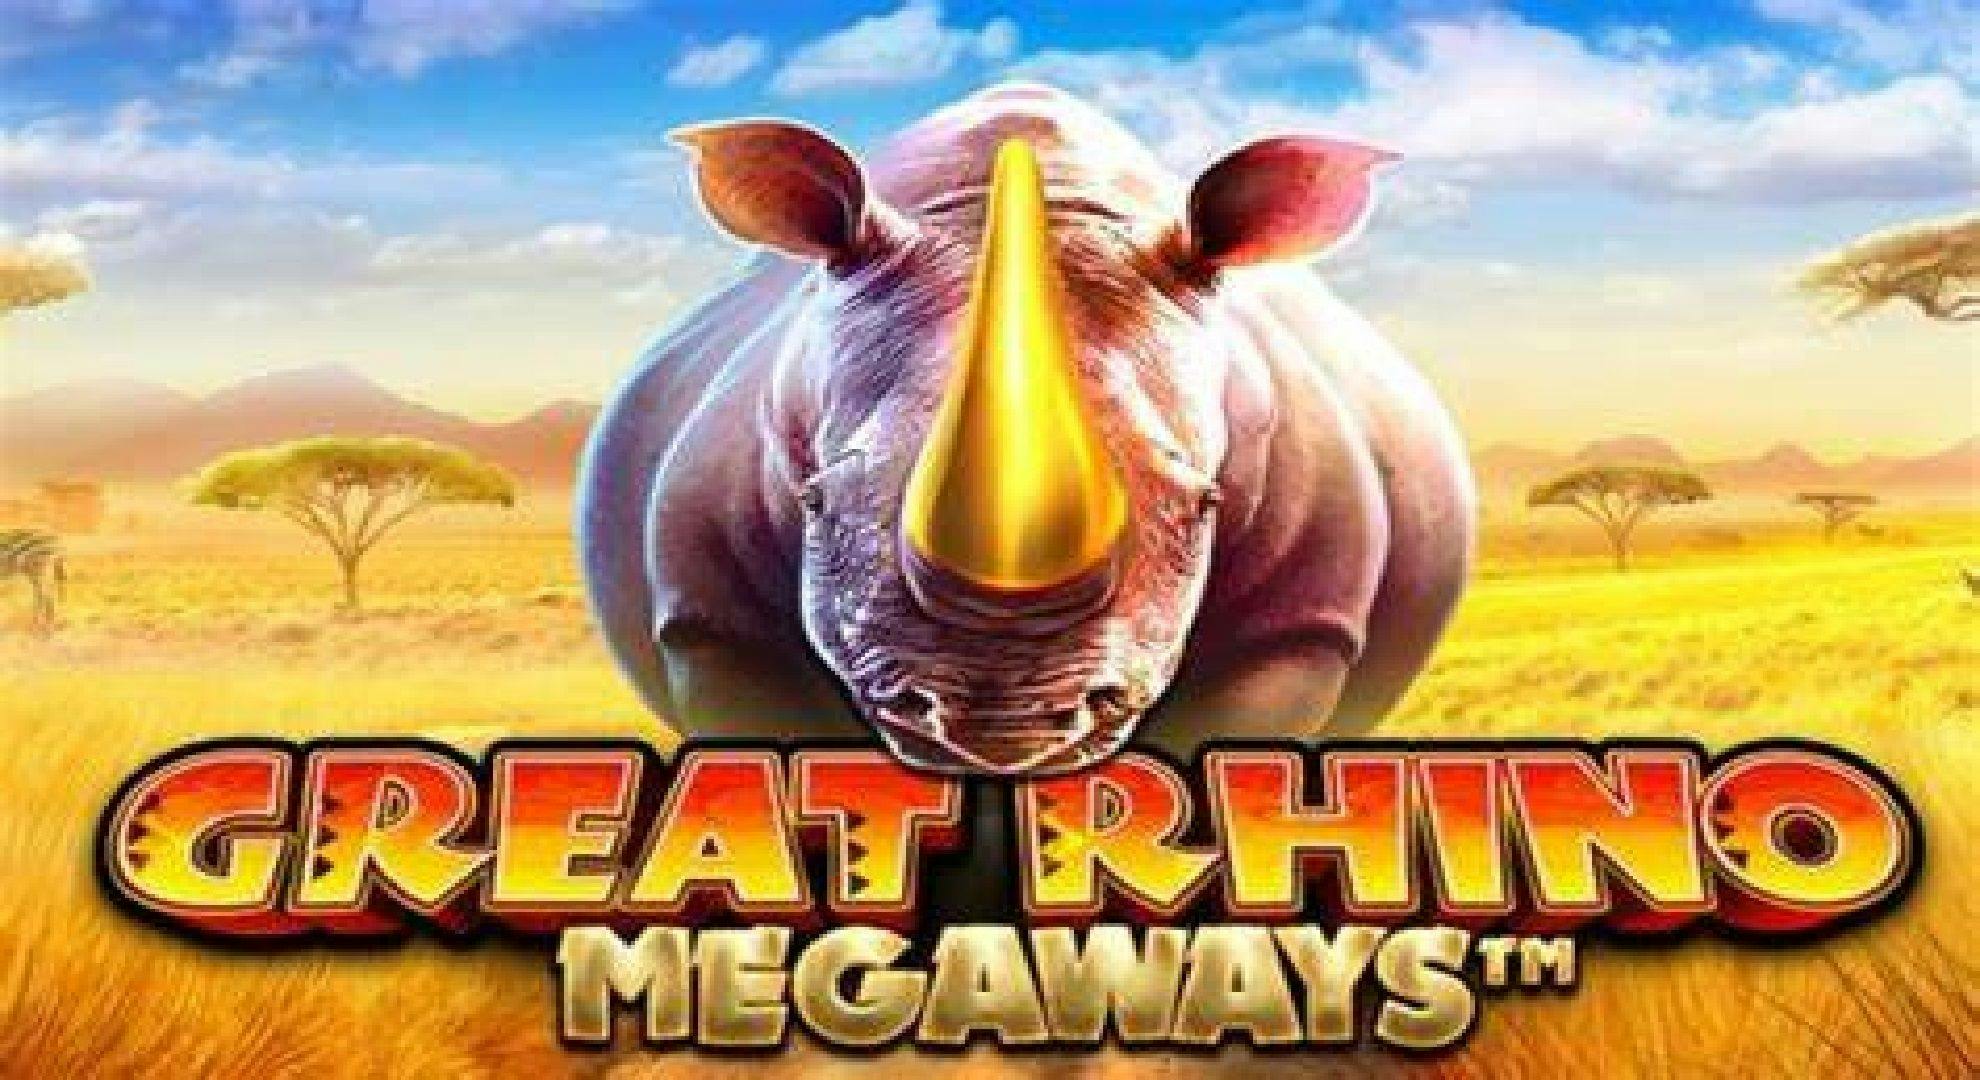 Great Rhino Megaways Slot Online Free Play